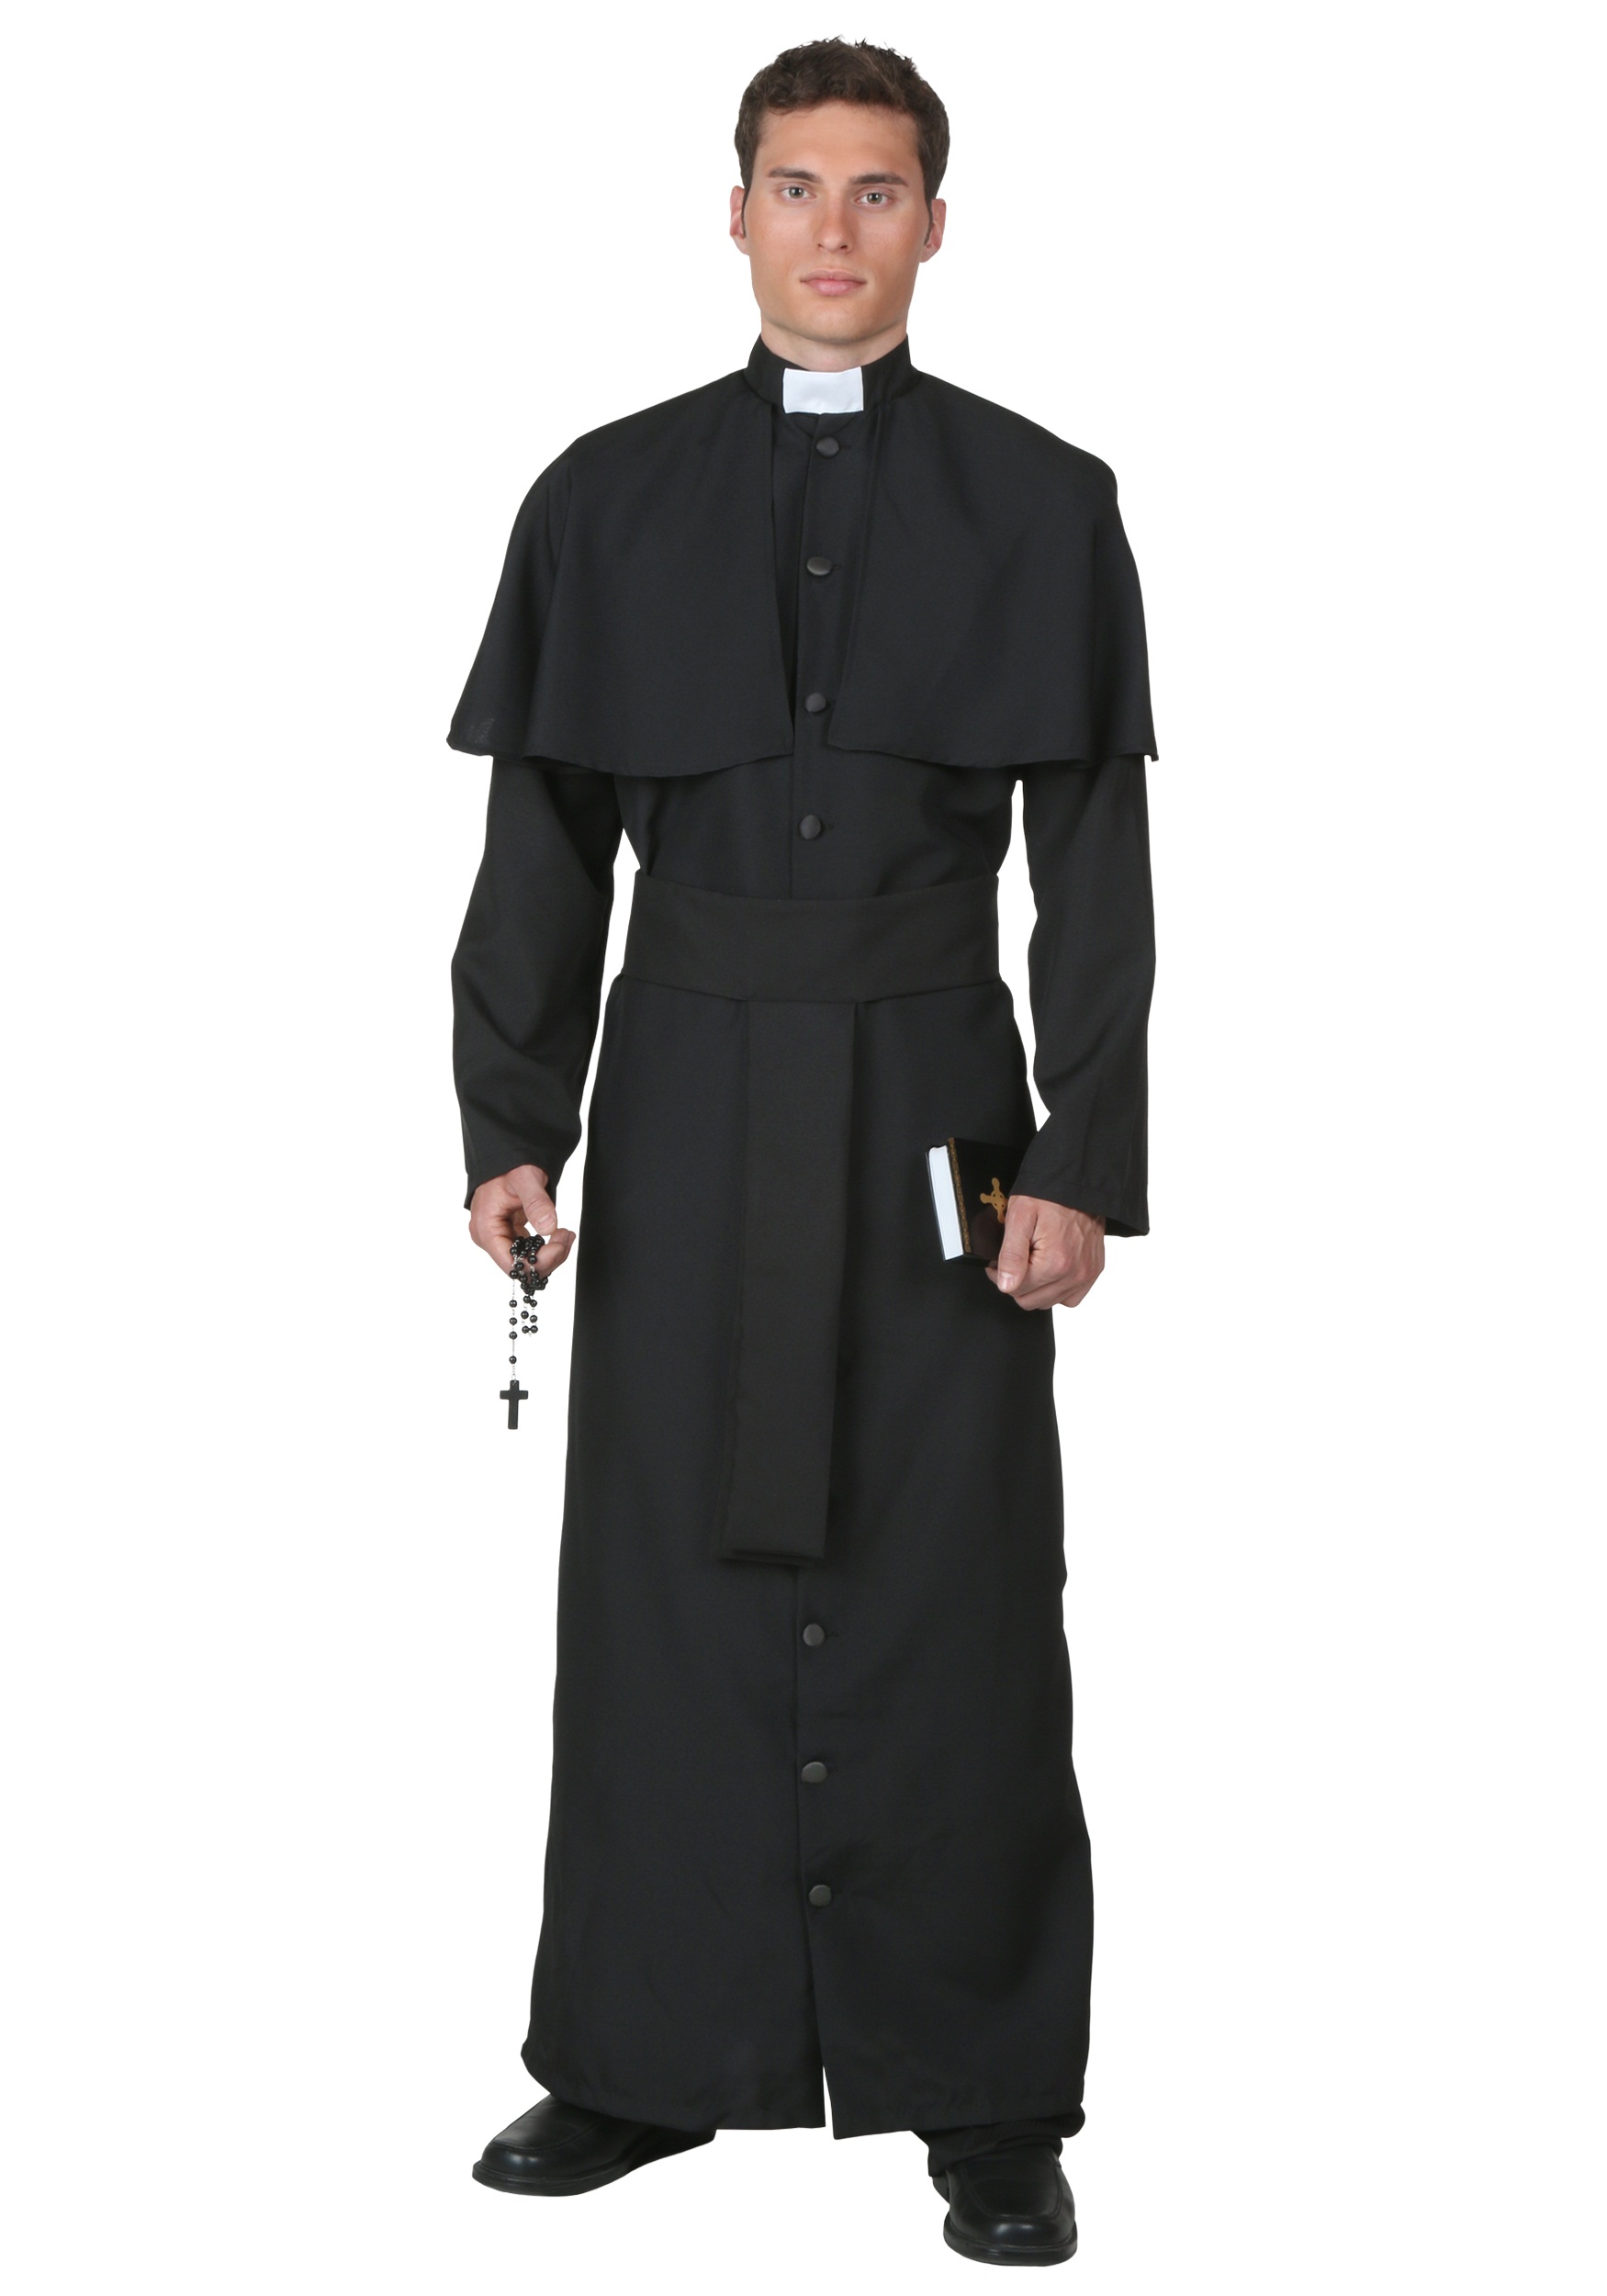 Deluxe Priest Fancy Dress Costume , Religious Adult Fancy Dress Costumes , Exclusive